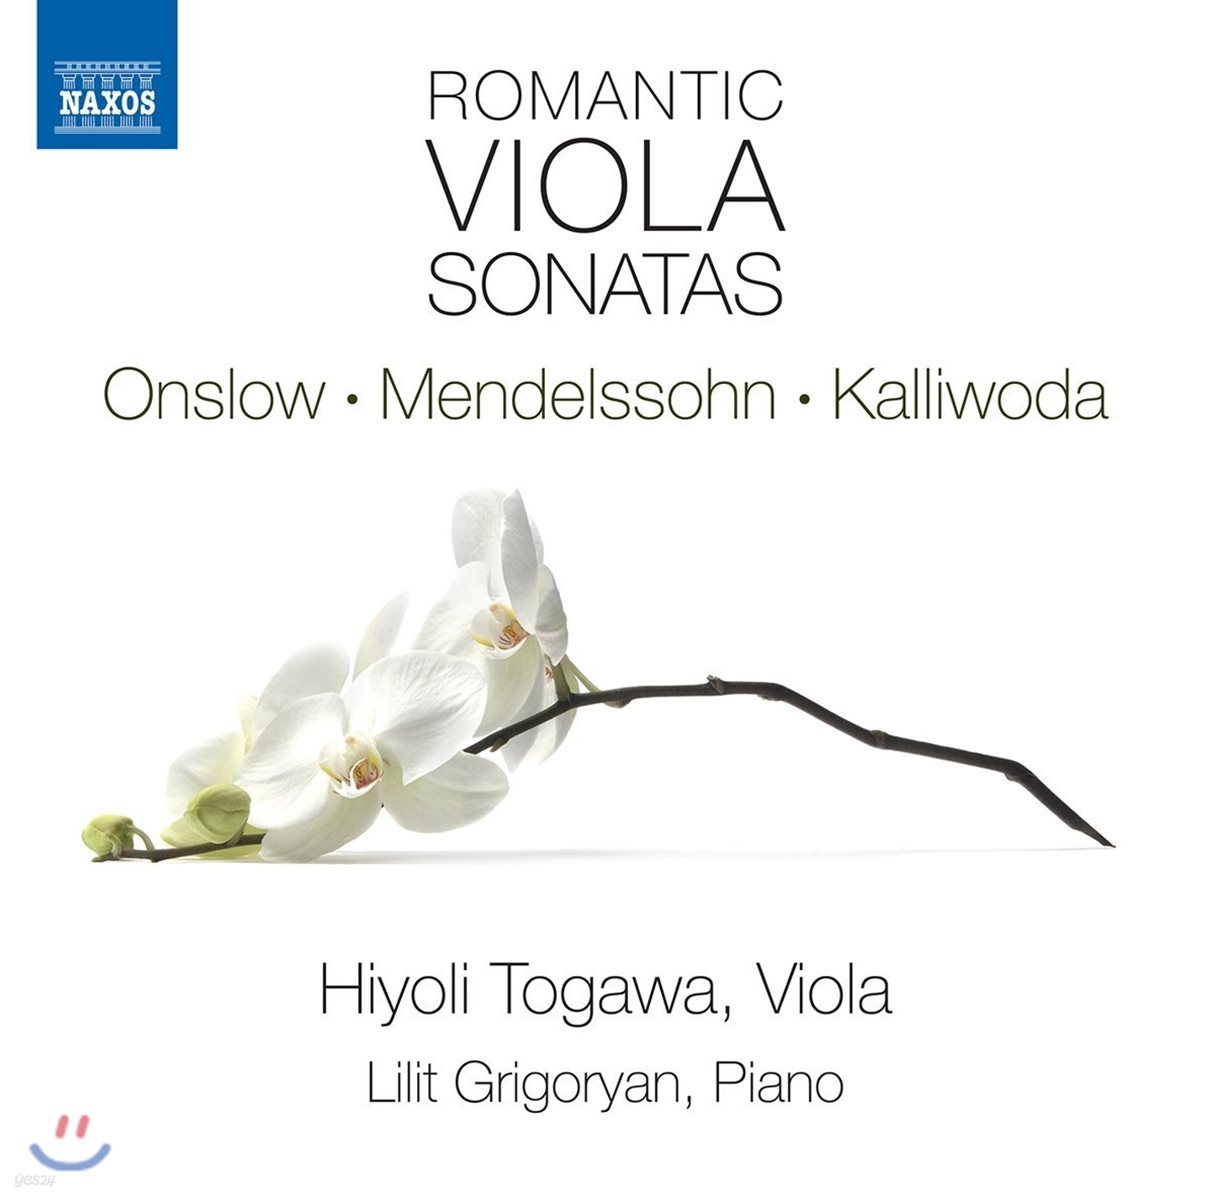 Hiyoli Togawa 낭만주의 시대 비올라 소나타 작품집 - 온슬로 / 멘델스존 / 칼리보다 (Romantic Viola Sonatas)